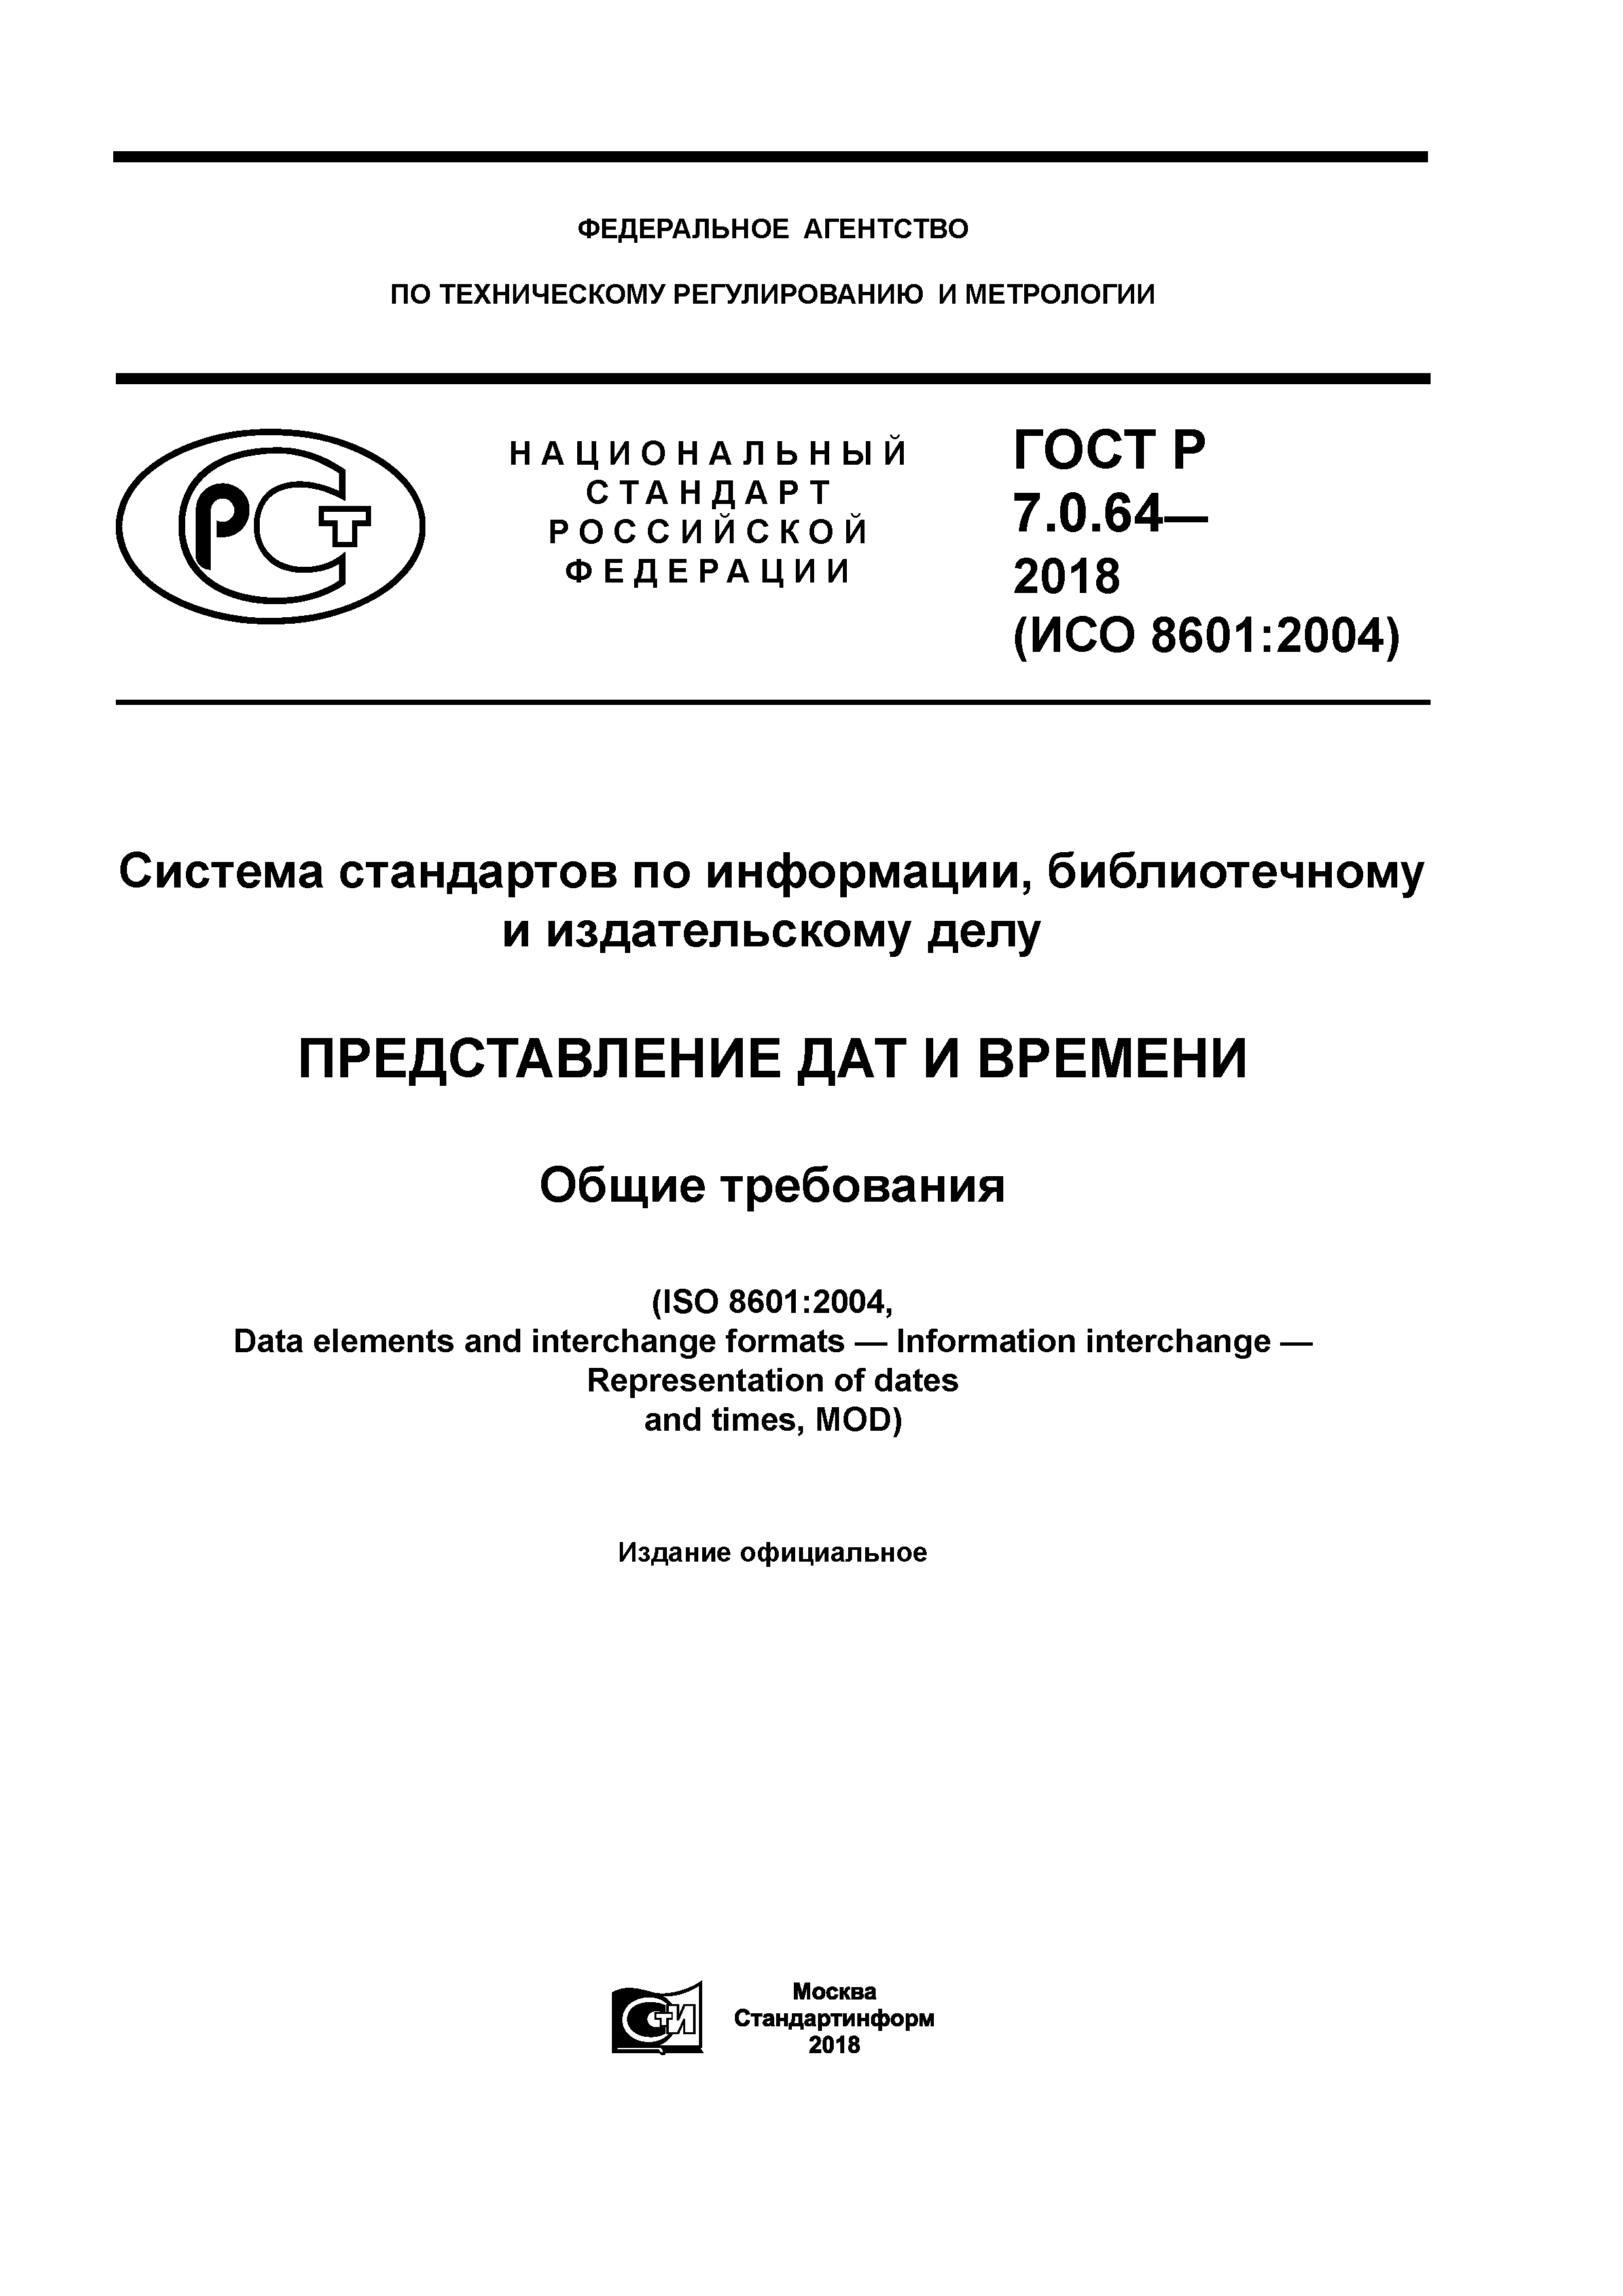 ГОСТ Р 7.0.64-2018